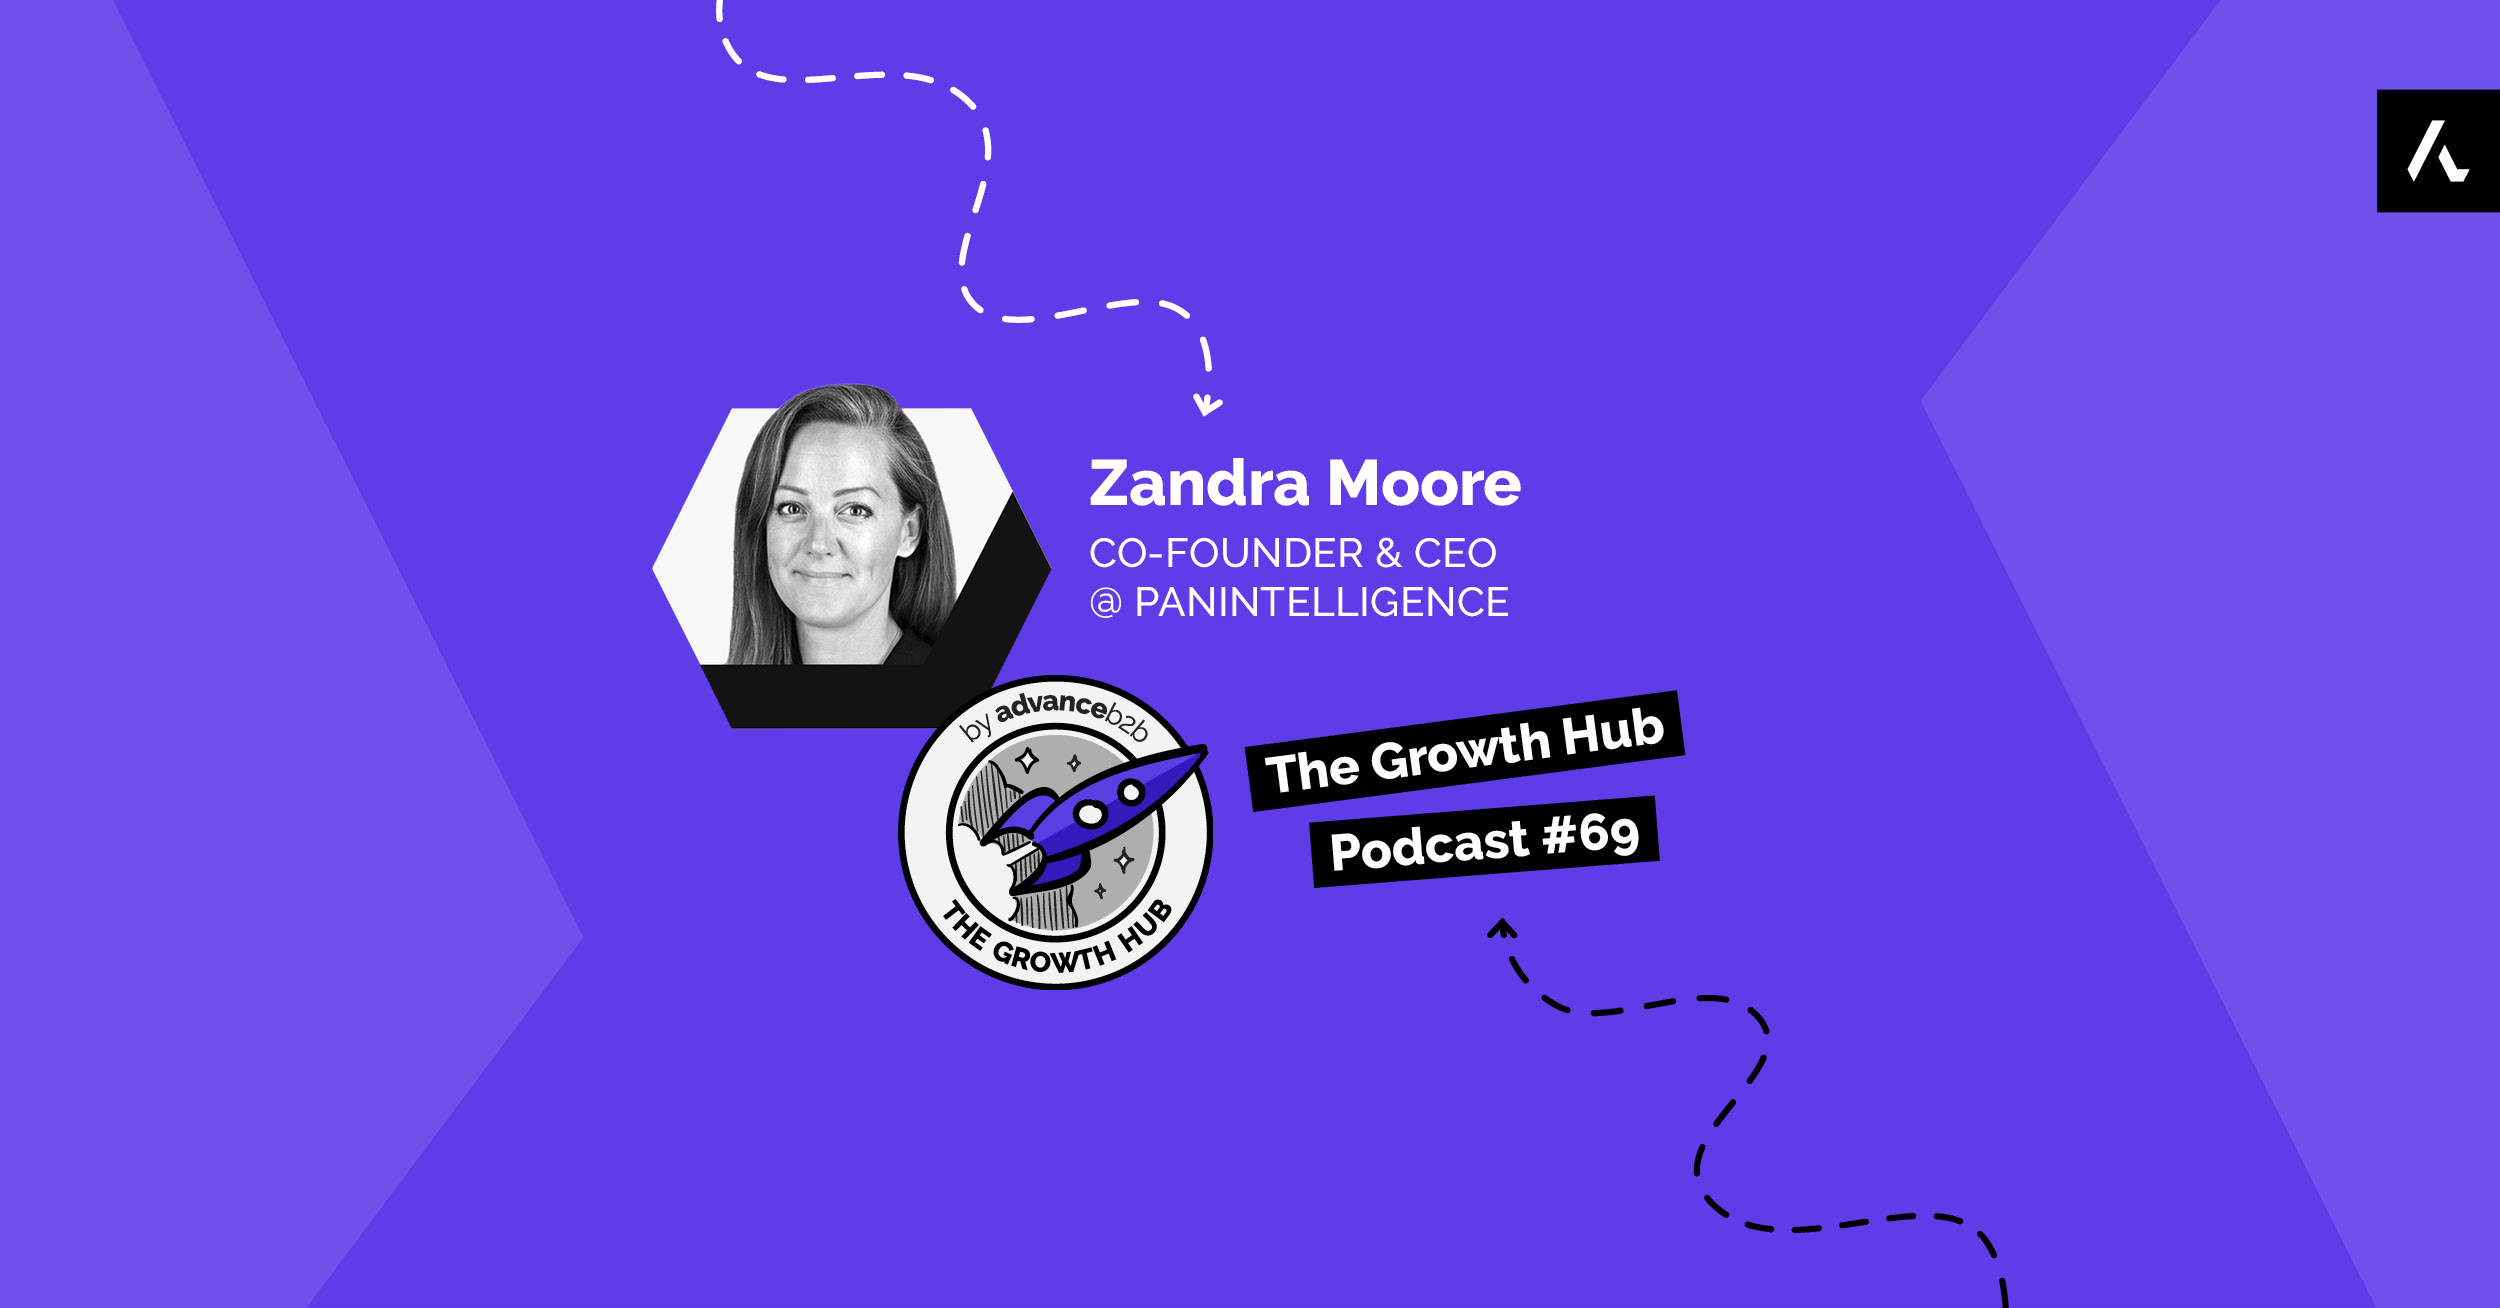 Zandra Moore - CEO and Co-Founder at Panintelligence